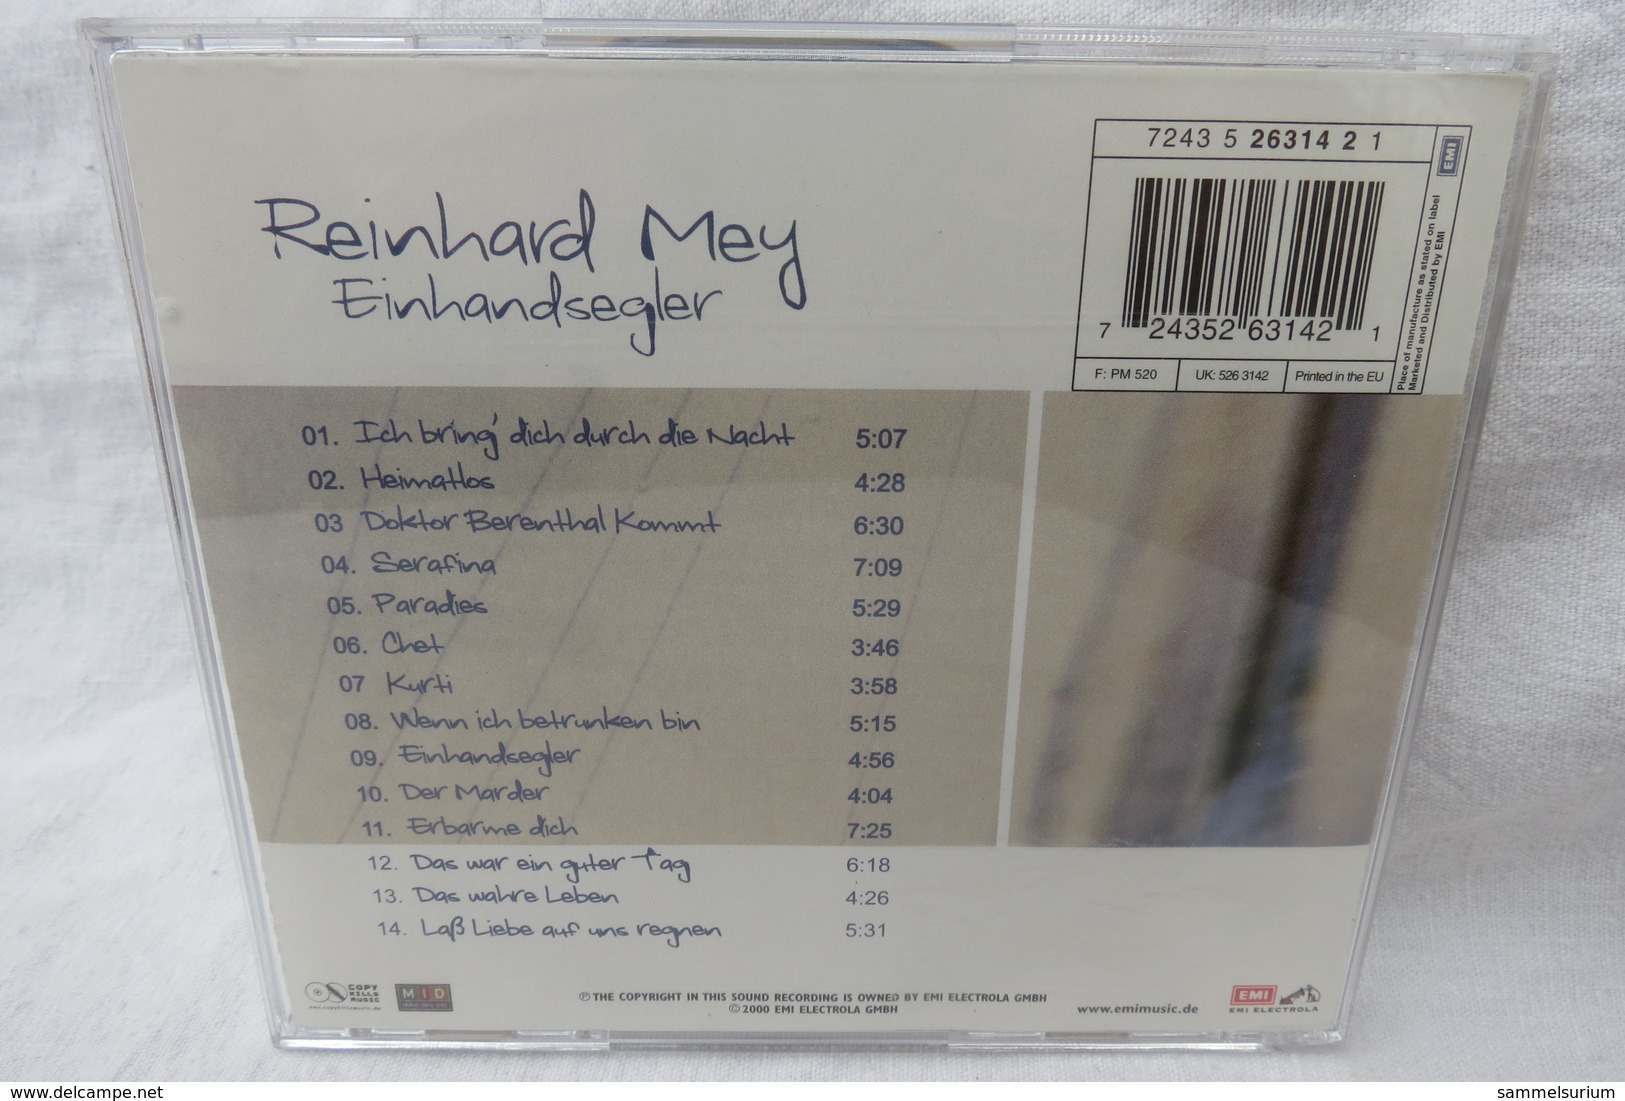 CD "Reinhard Mey" Einhandsegler - Other - German Music